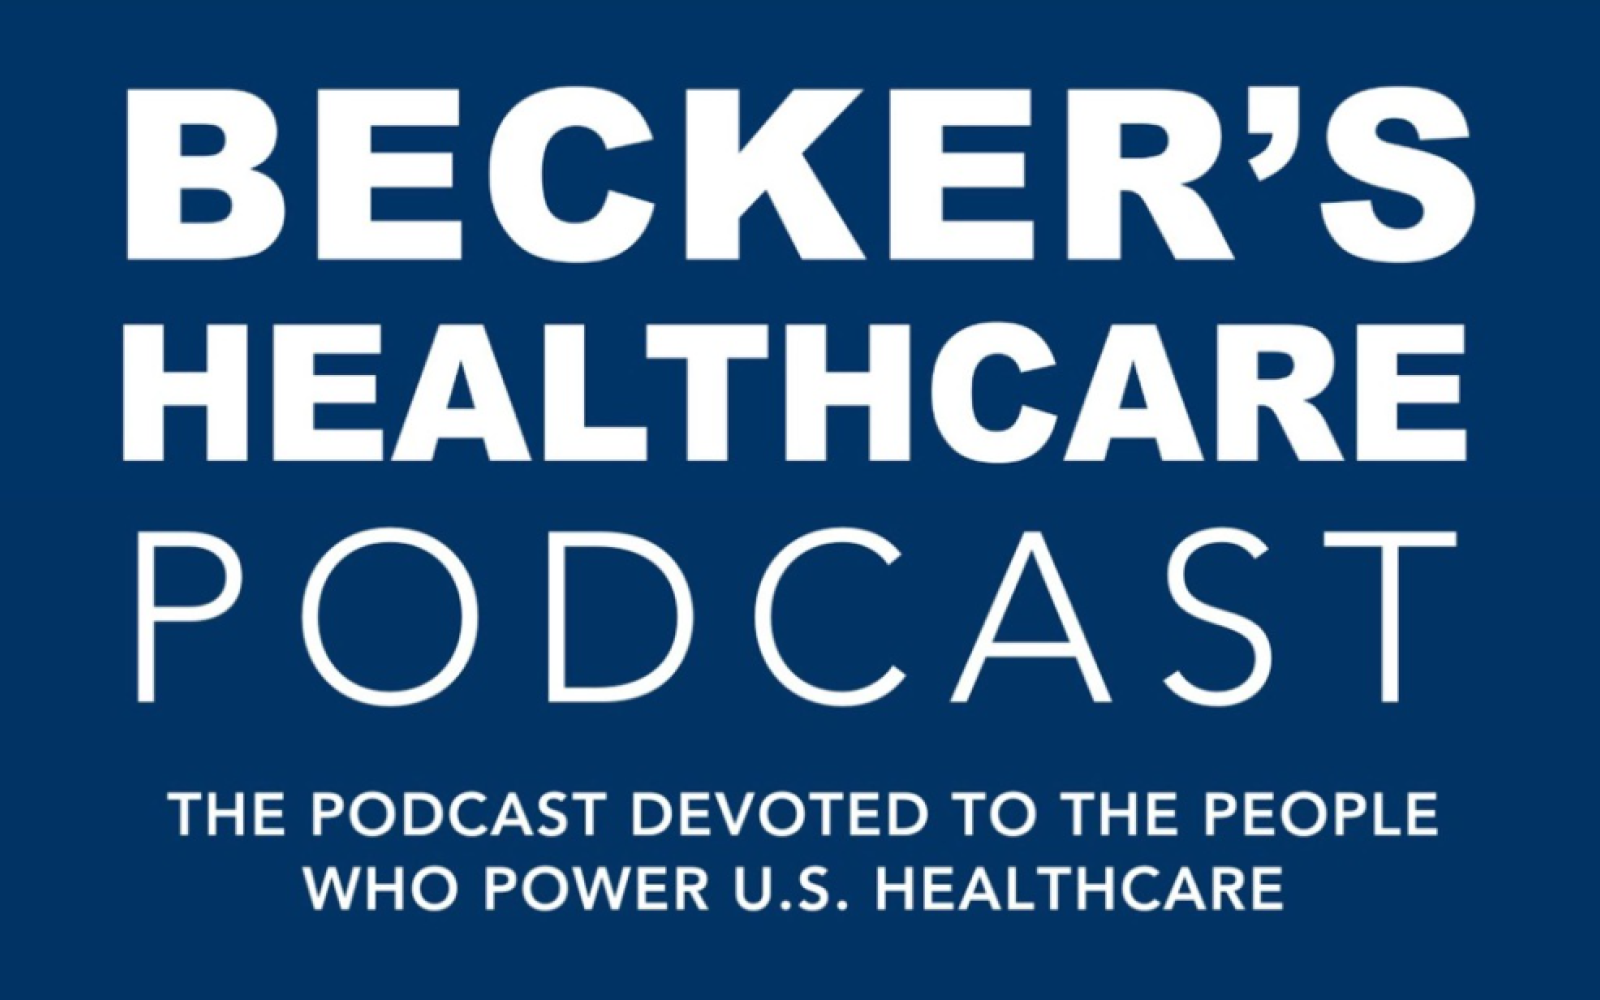 Becker's Healthcare Podcast